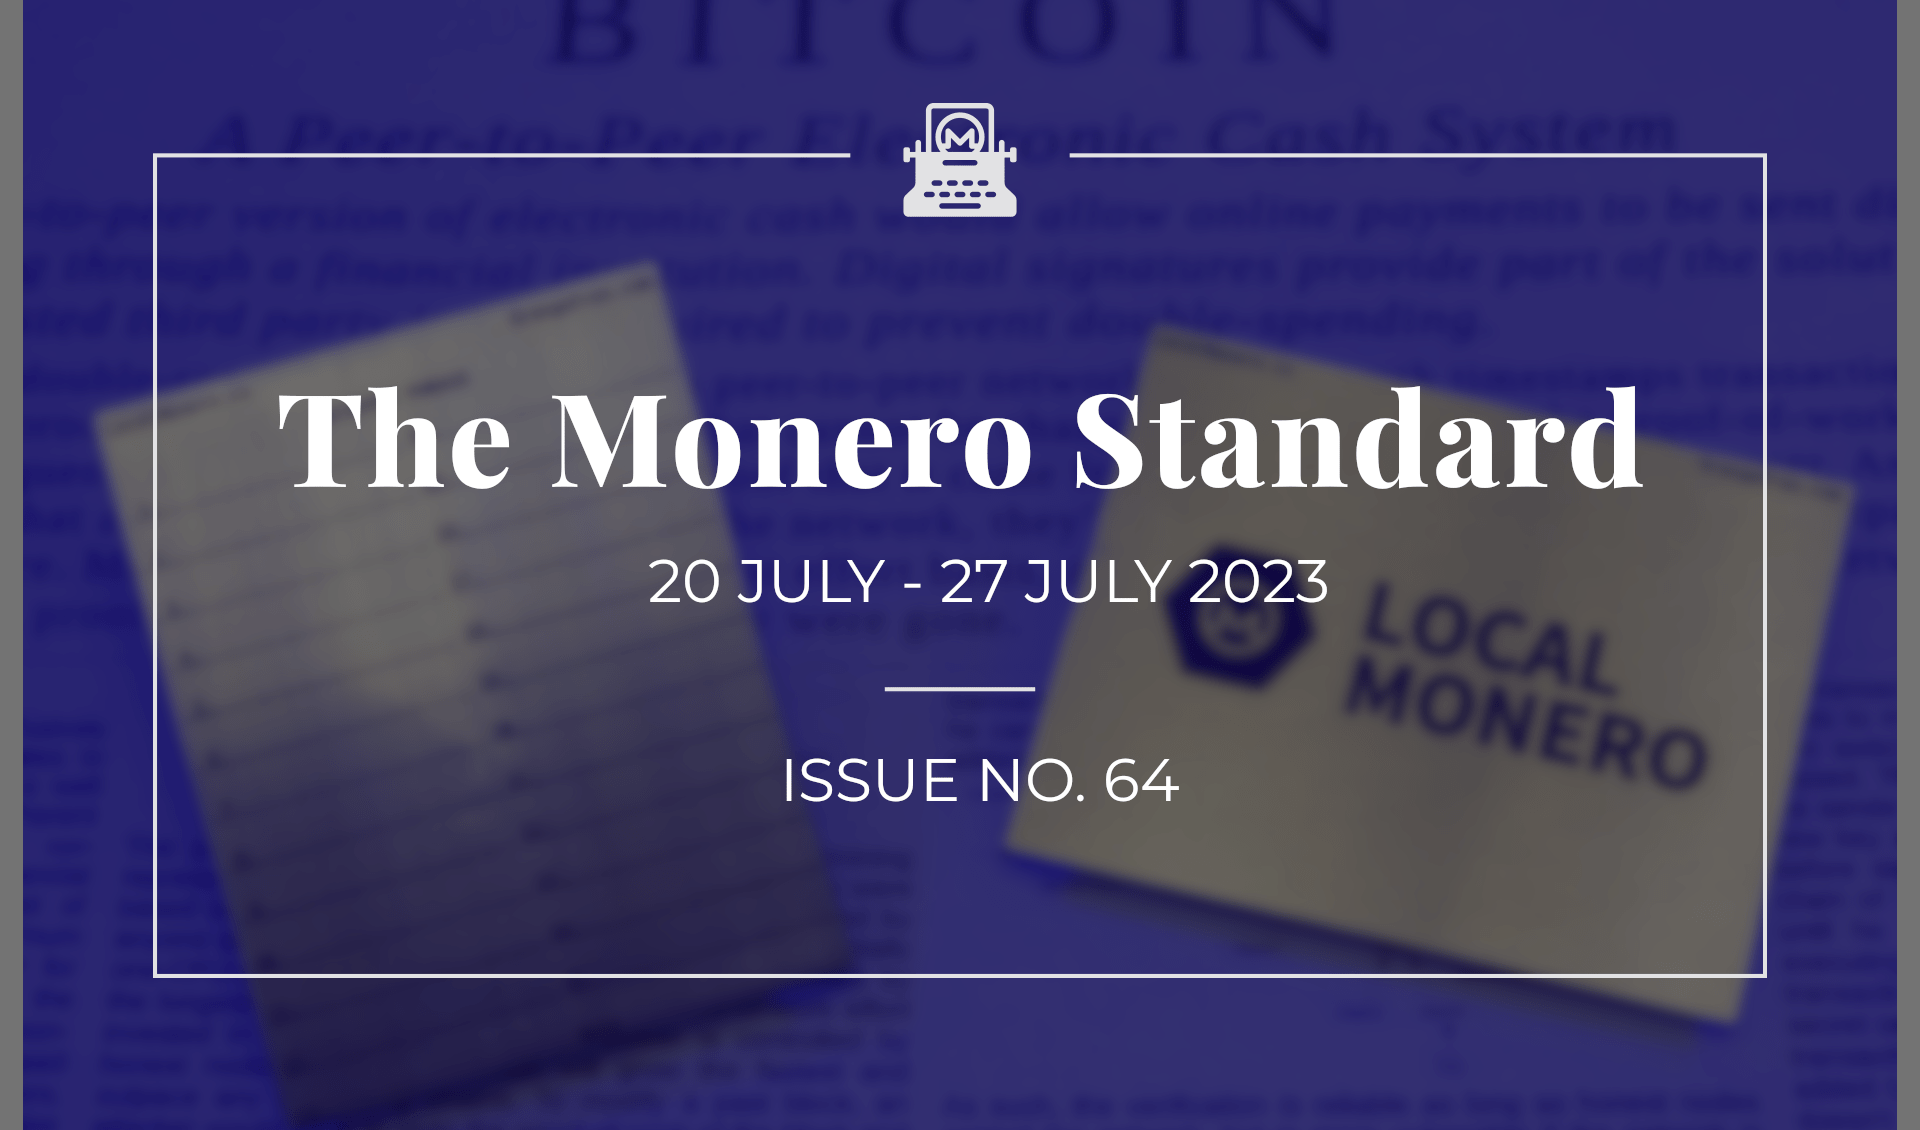 The Monero Standard #64: 20 July 2023 - 27 July 2023